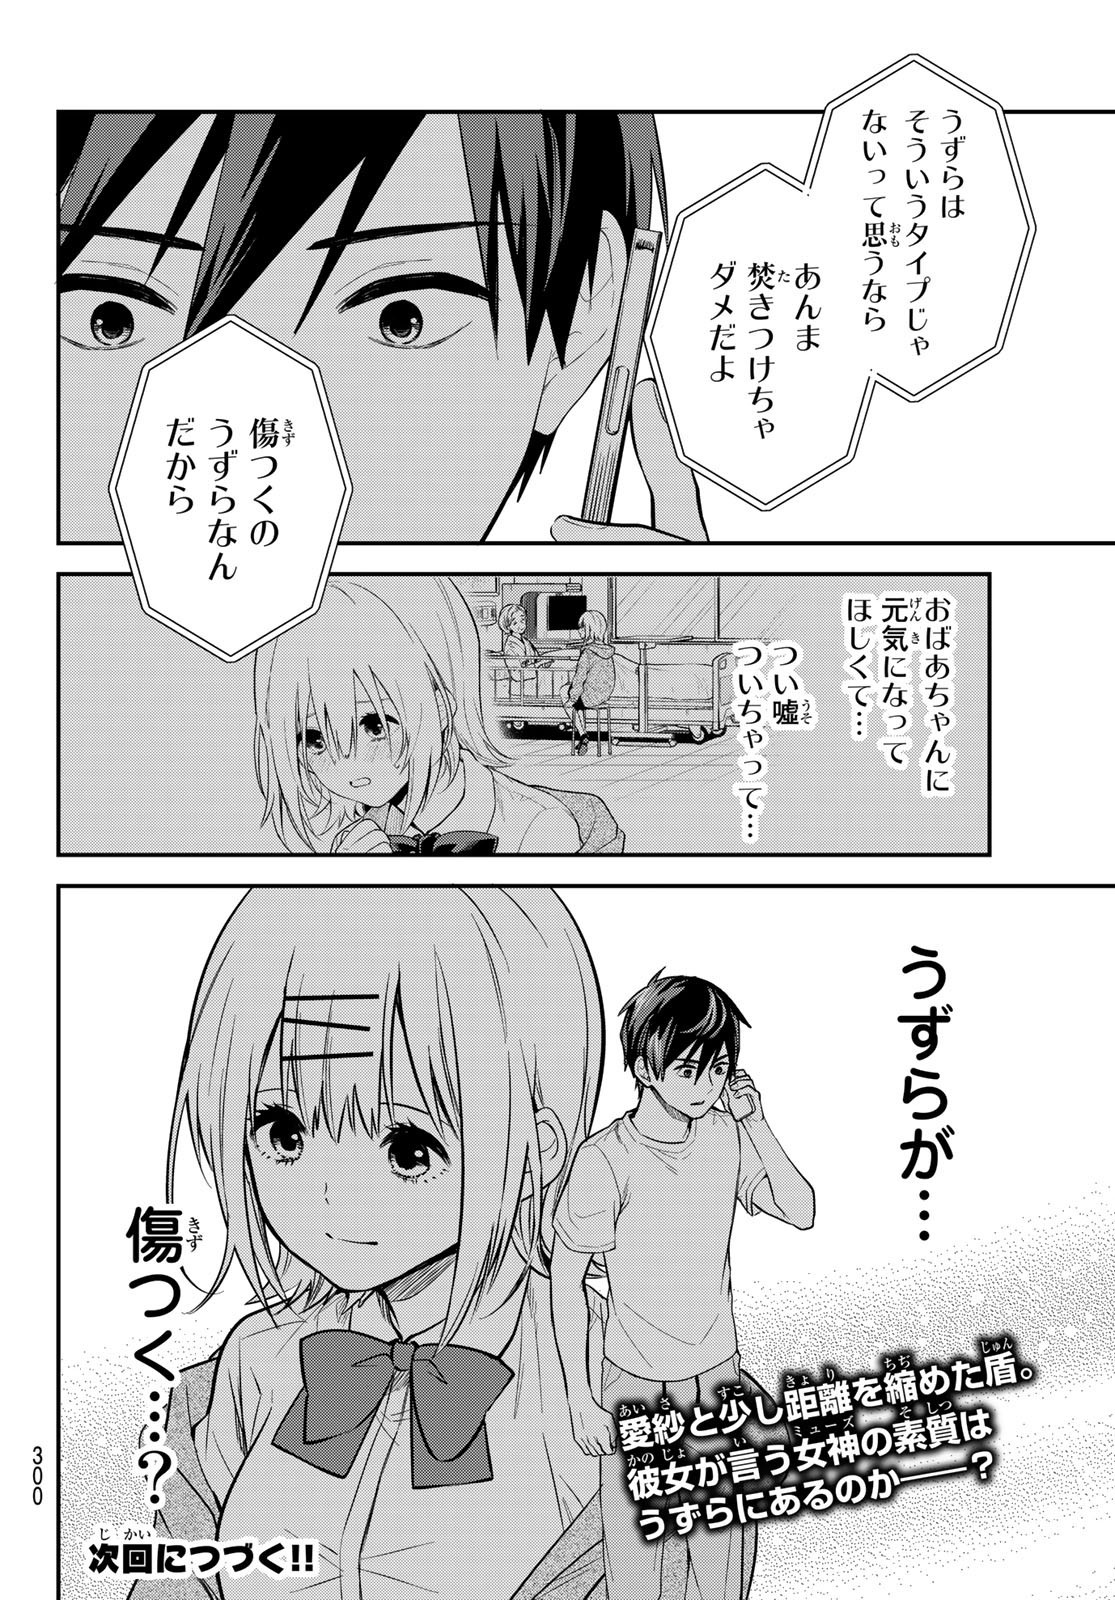 Kimi ga Megami Nara Ii no ni (I Wish You Were My Muse) - Chapter 008 - Page 20